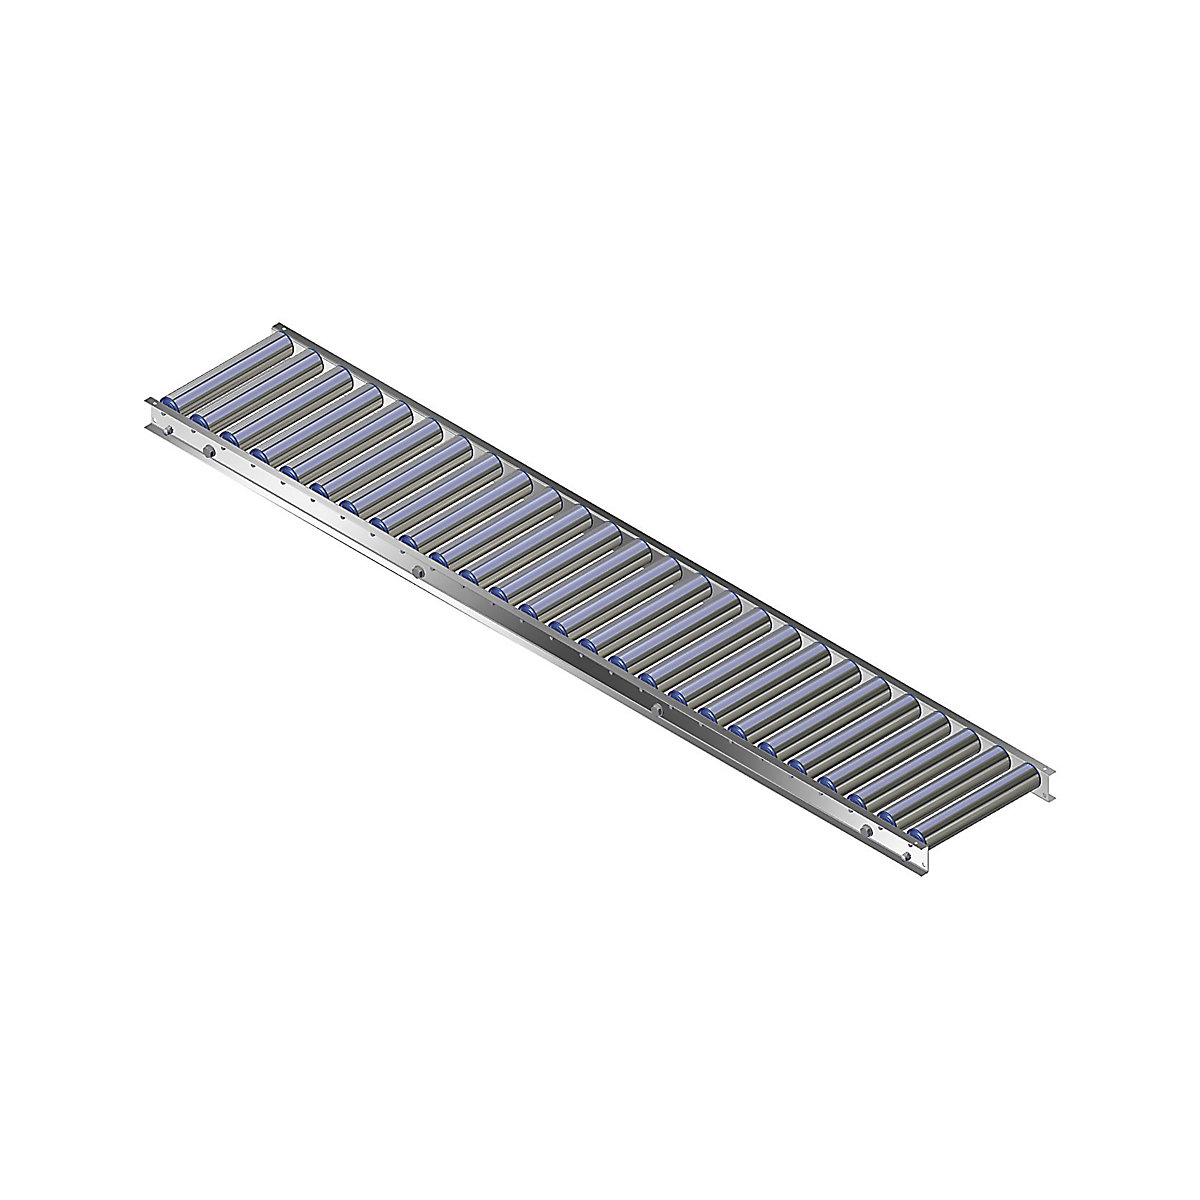 Gura – Light duty roller conveyor, aluminium frame with aluminium rollers, track width 300 mm, axle spacing 75 mm, length 2.0 m